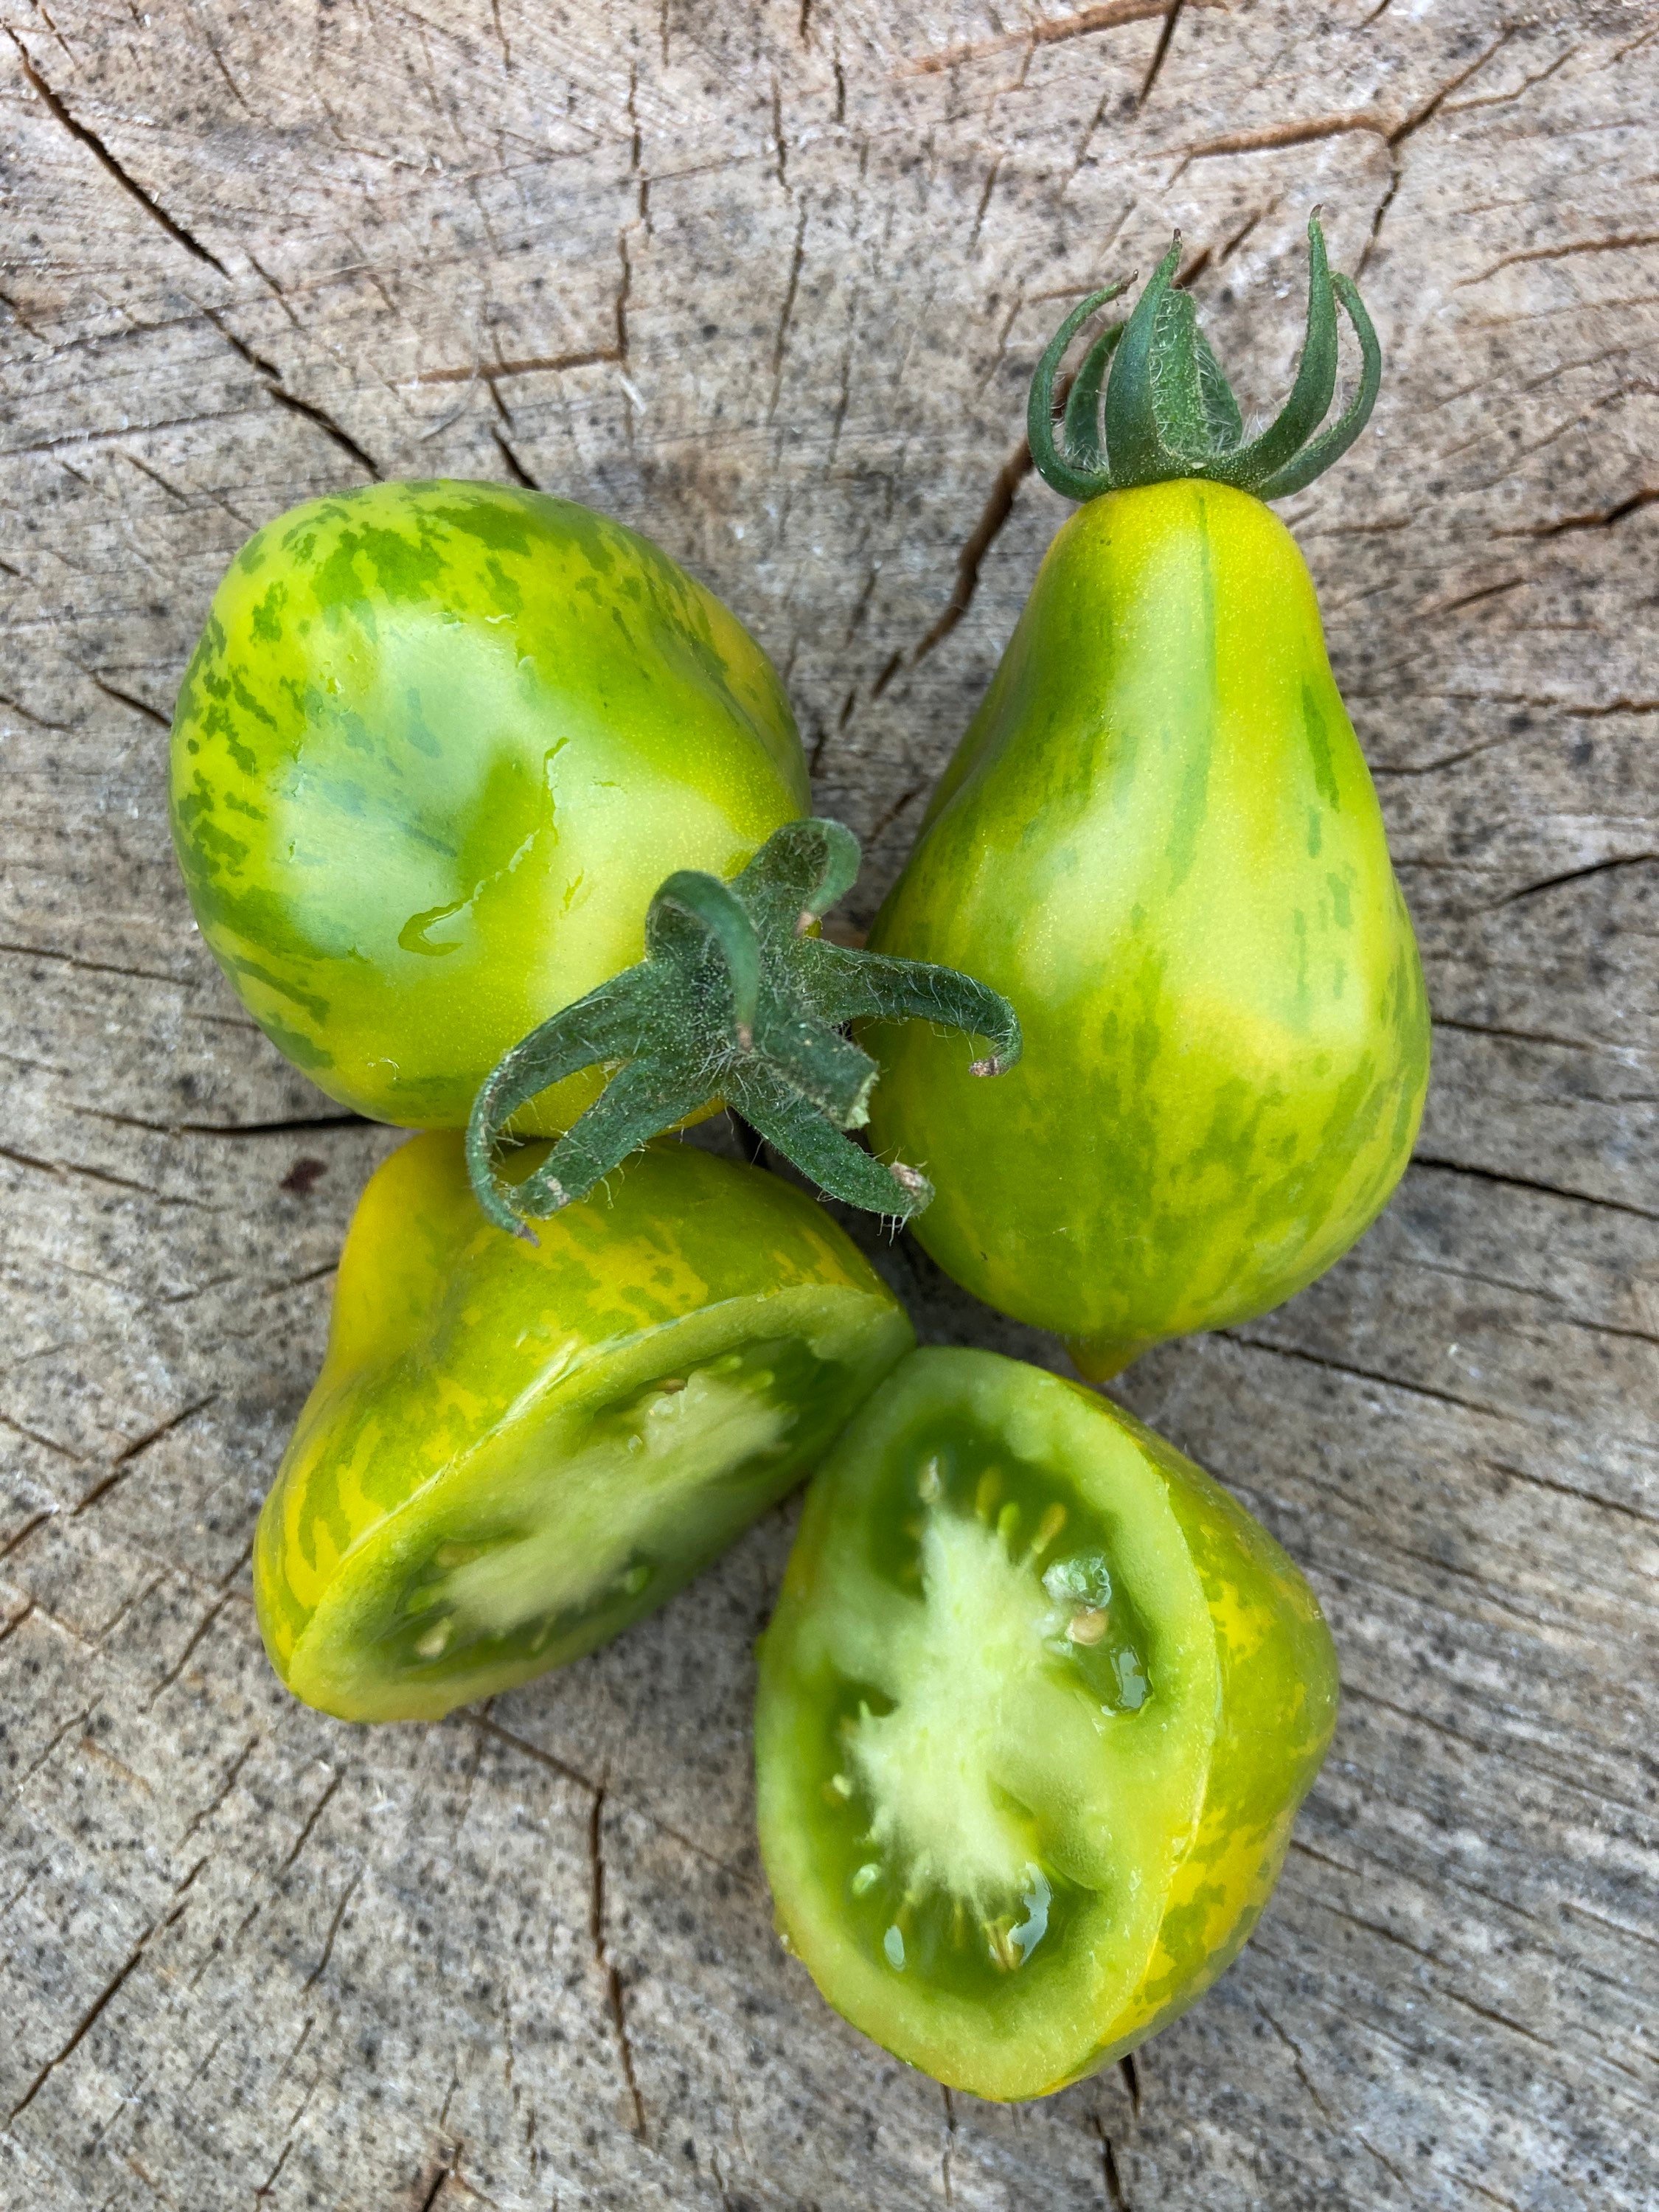 Michael Pollan Tomato Seeds Rare Heirloom Tomatoes pic